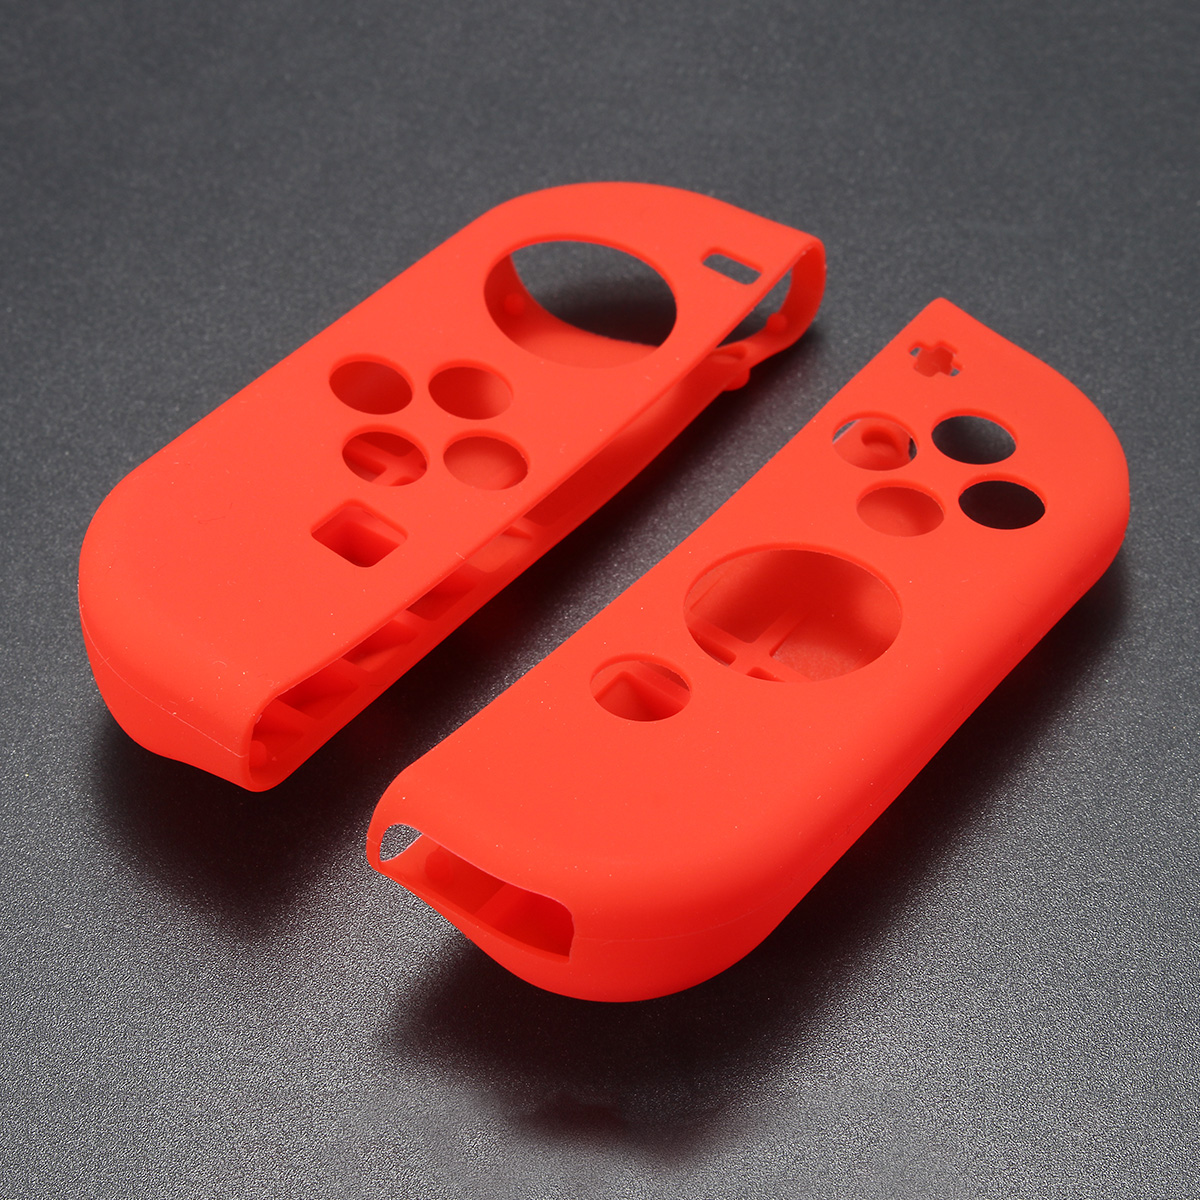 Silicon Case Protective Impact Resistant Rubber Skin Cover For Nintendo Switch Joy-Con Controller 29